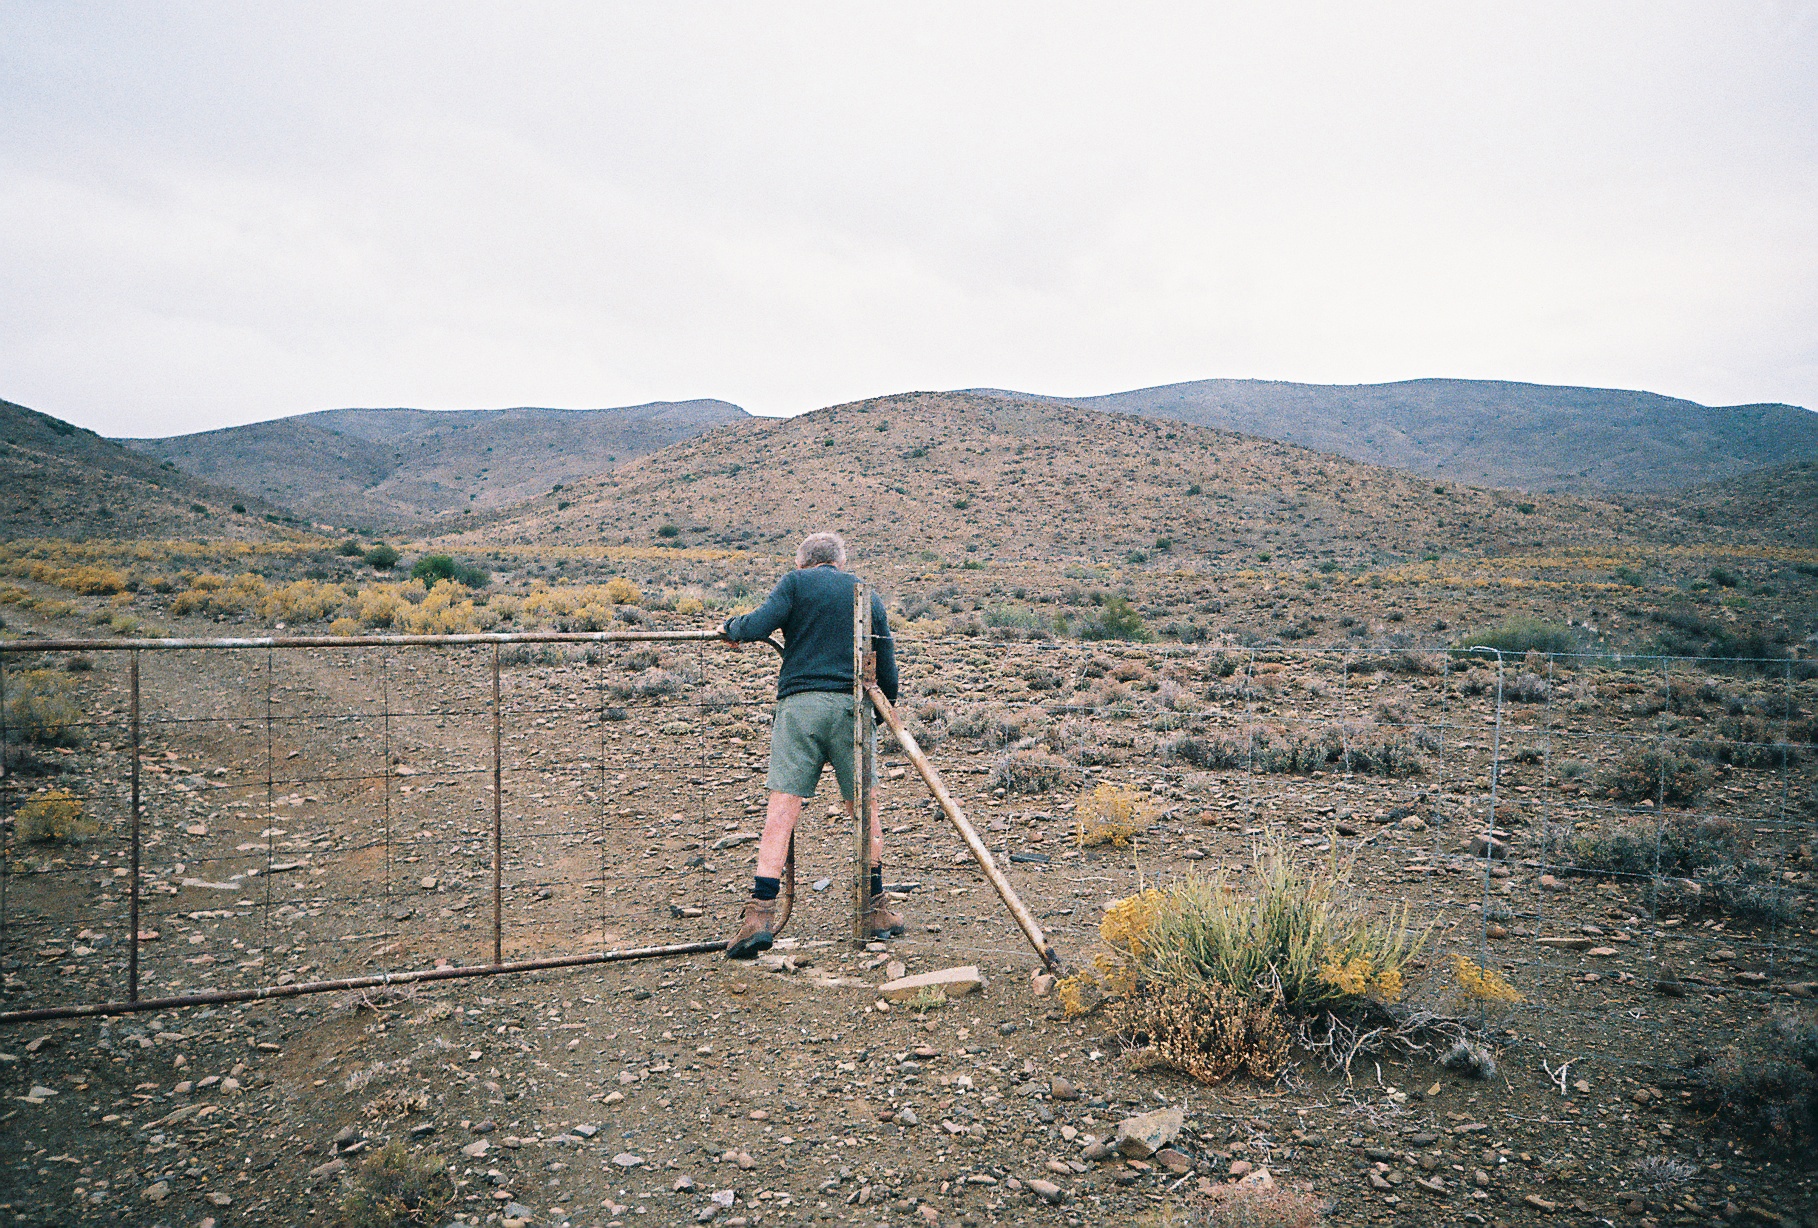 Still frame from the Goldblatt documentary directed by Daniel Zimbler shows David Goldblatt walking through a gate in a wire fence.
